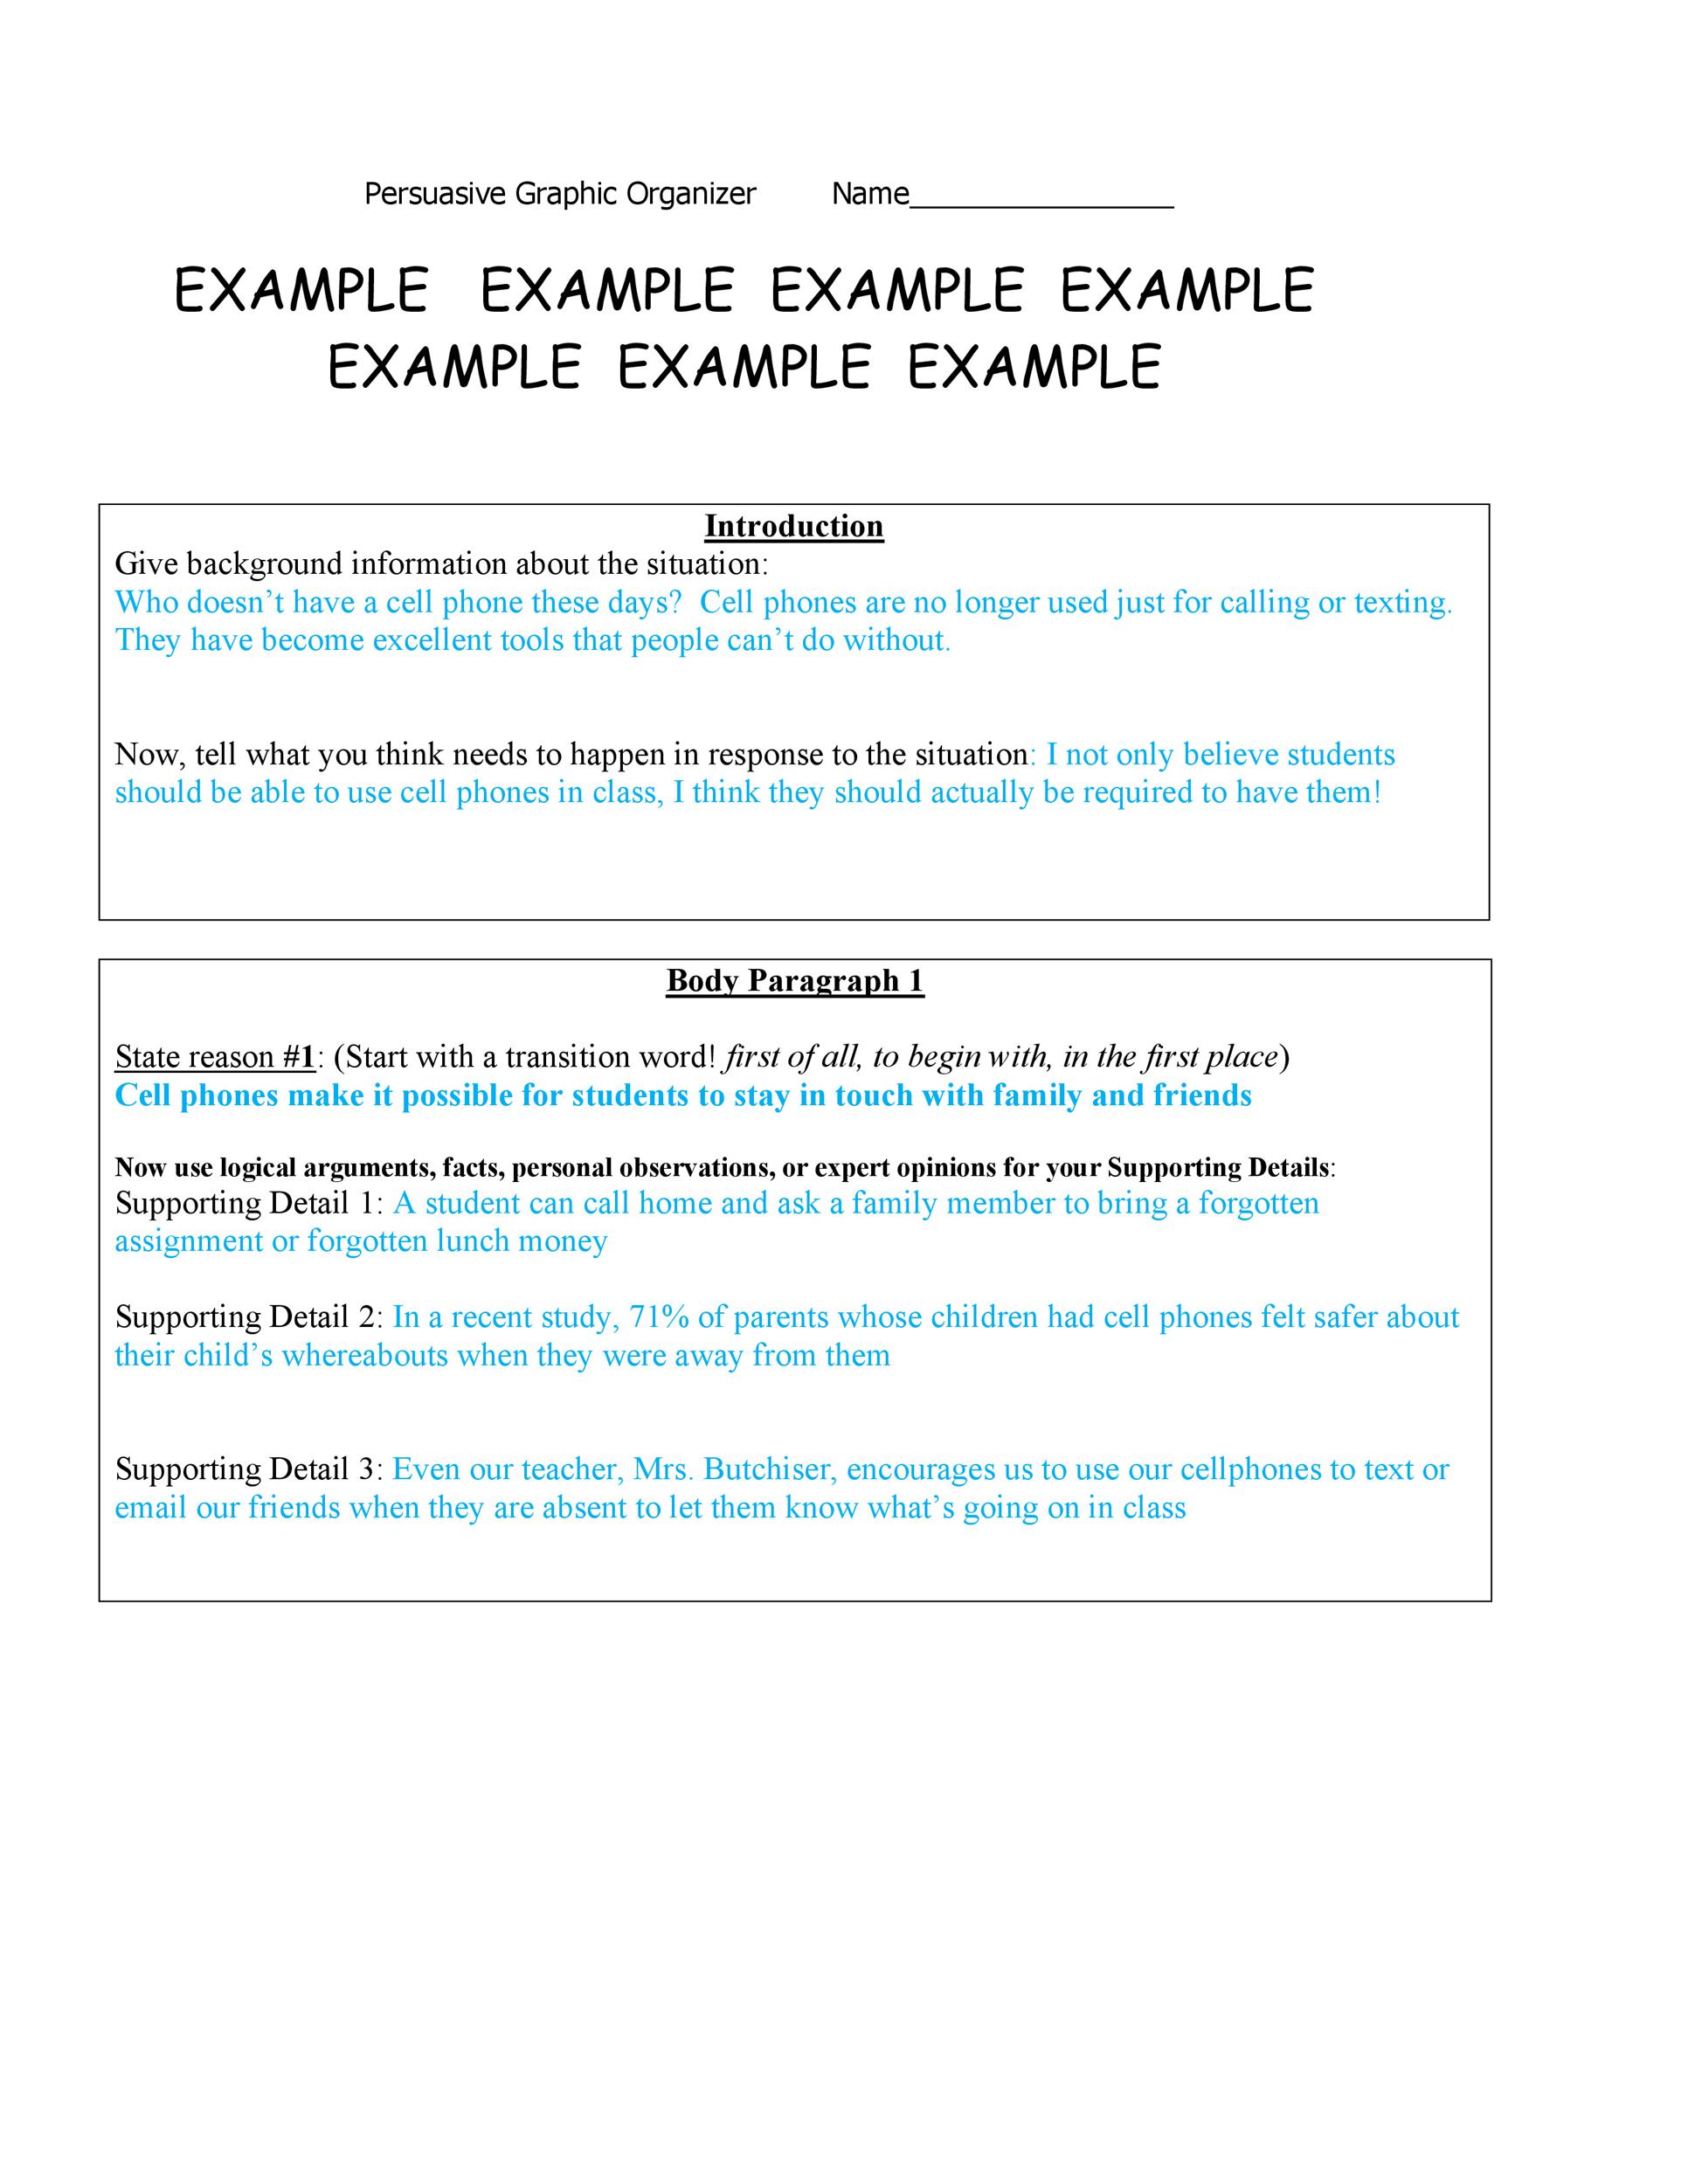 Free persuasive essay example 09